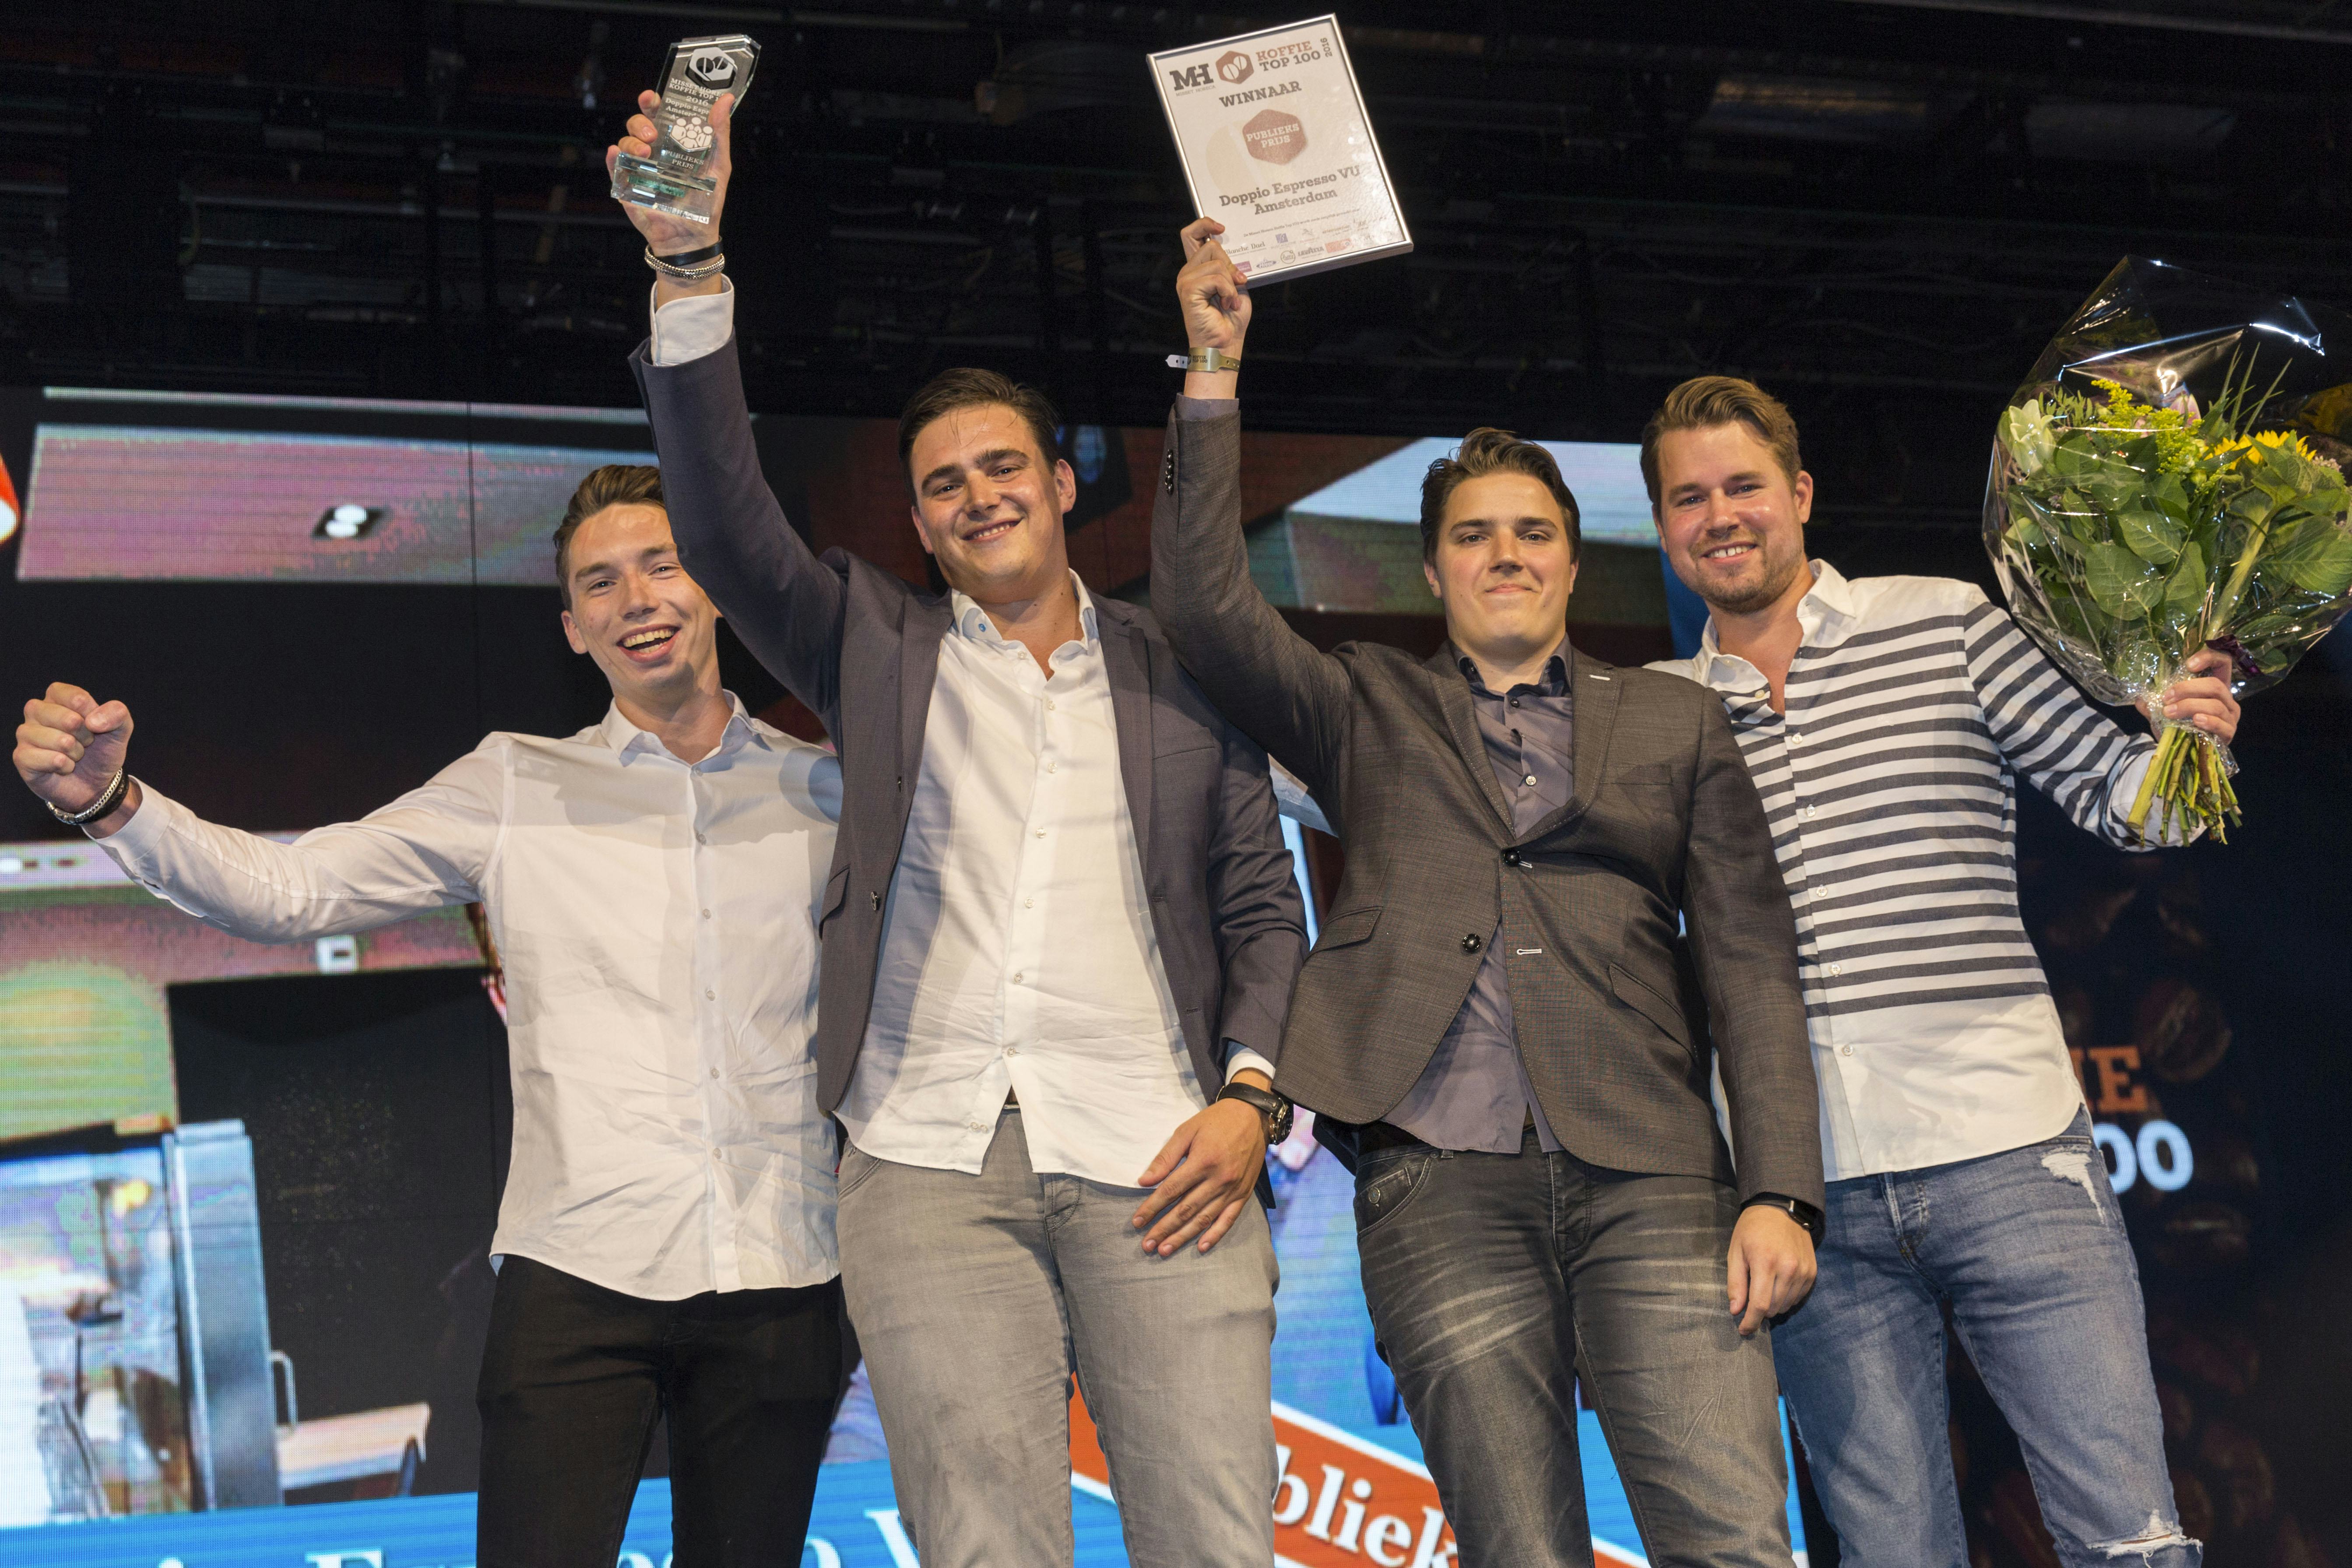 Video: Doppio Amsterdam over winnen Publieksprijs Koffie Top 100